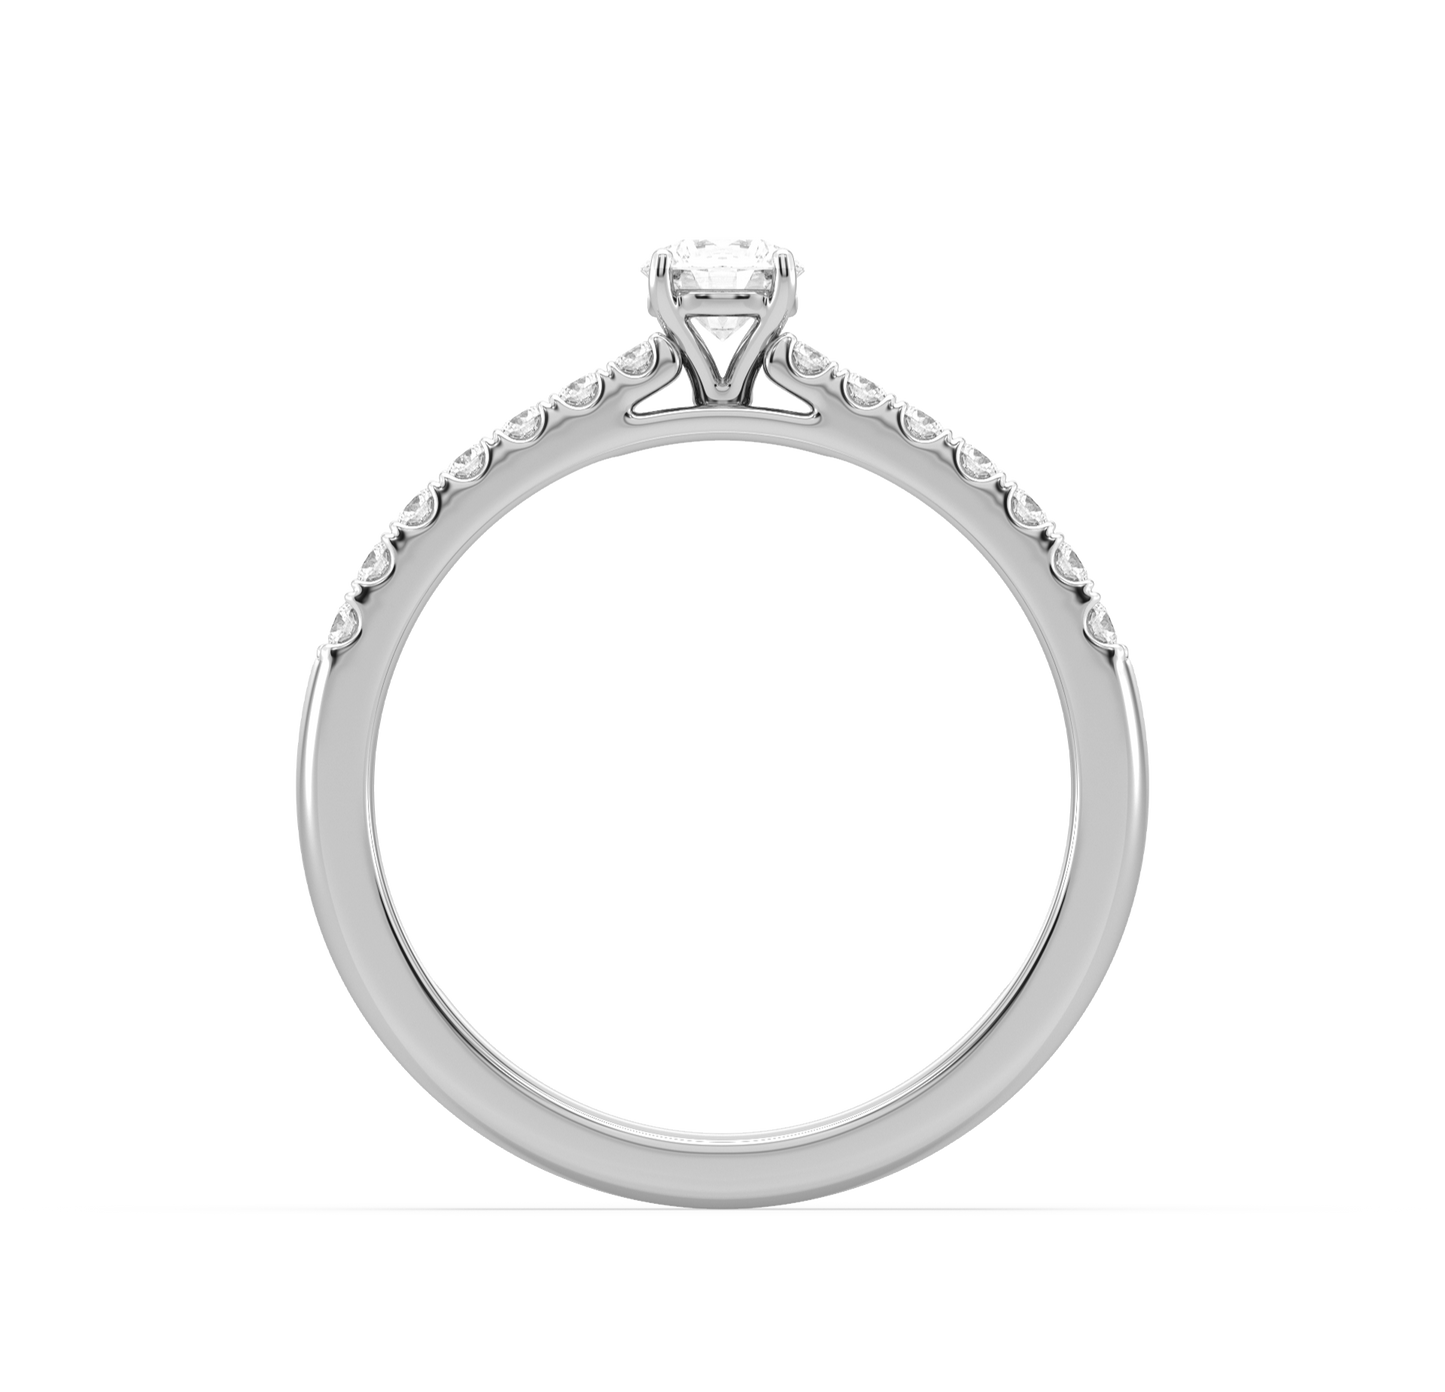 Customised ring RG21010-PH21044